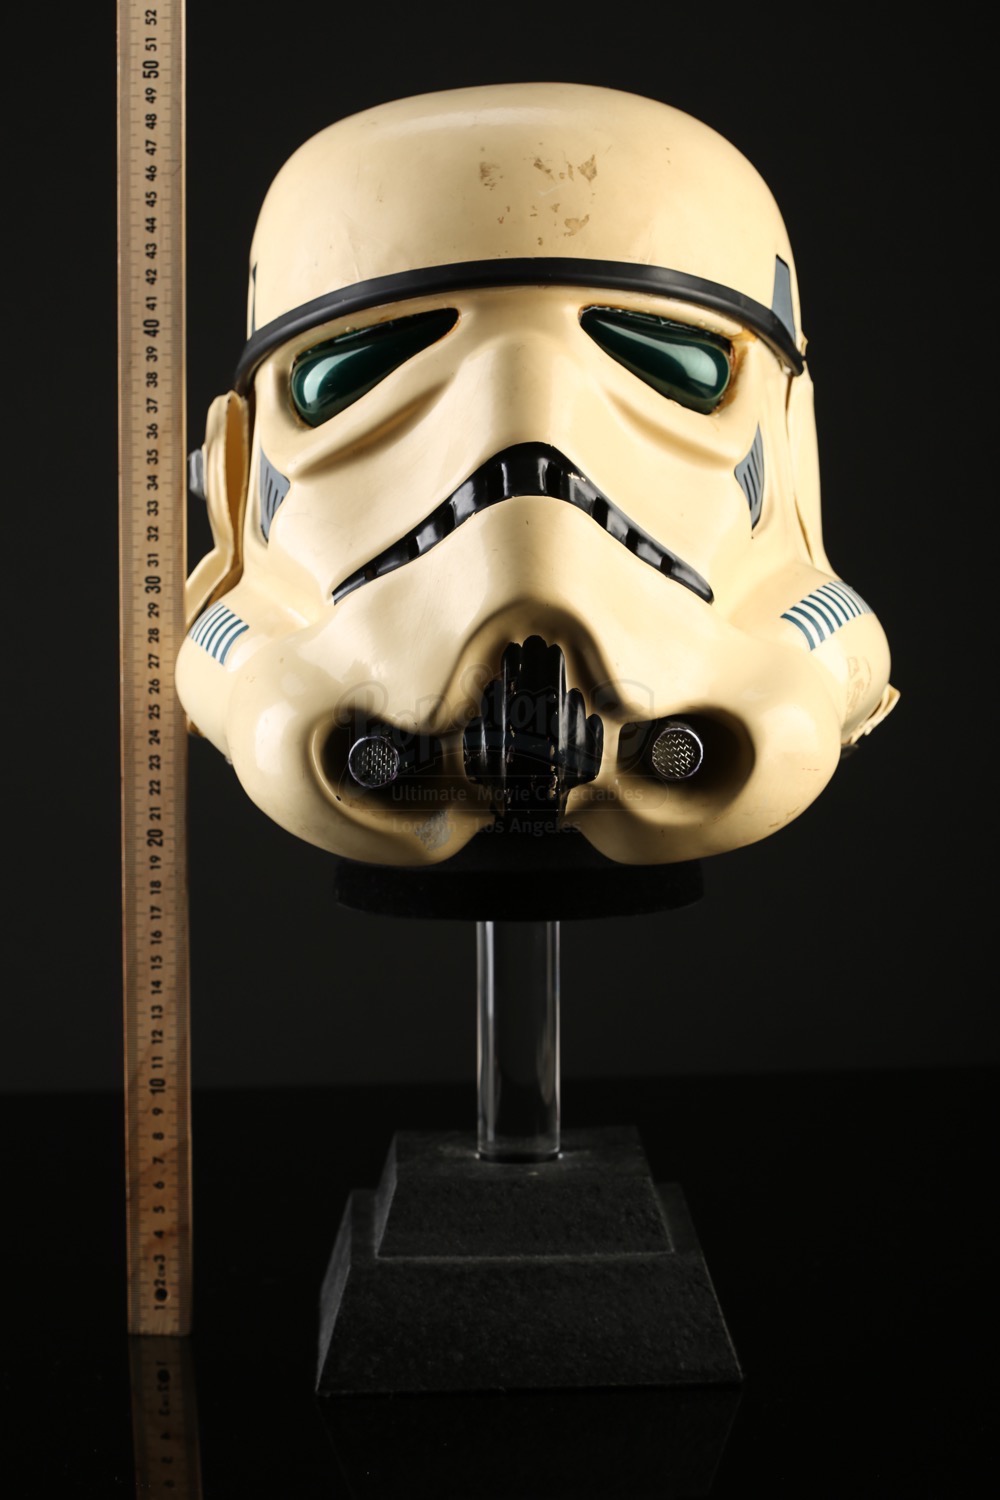 empire strikes back stormtrooper helmet pepakura file